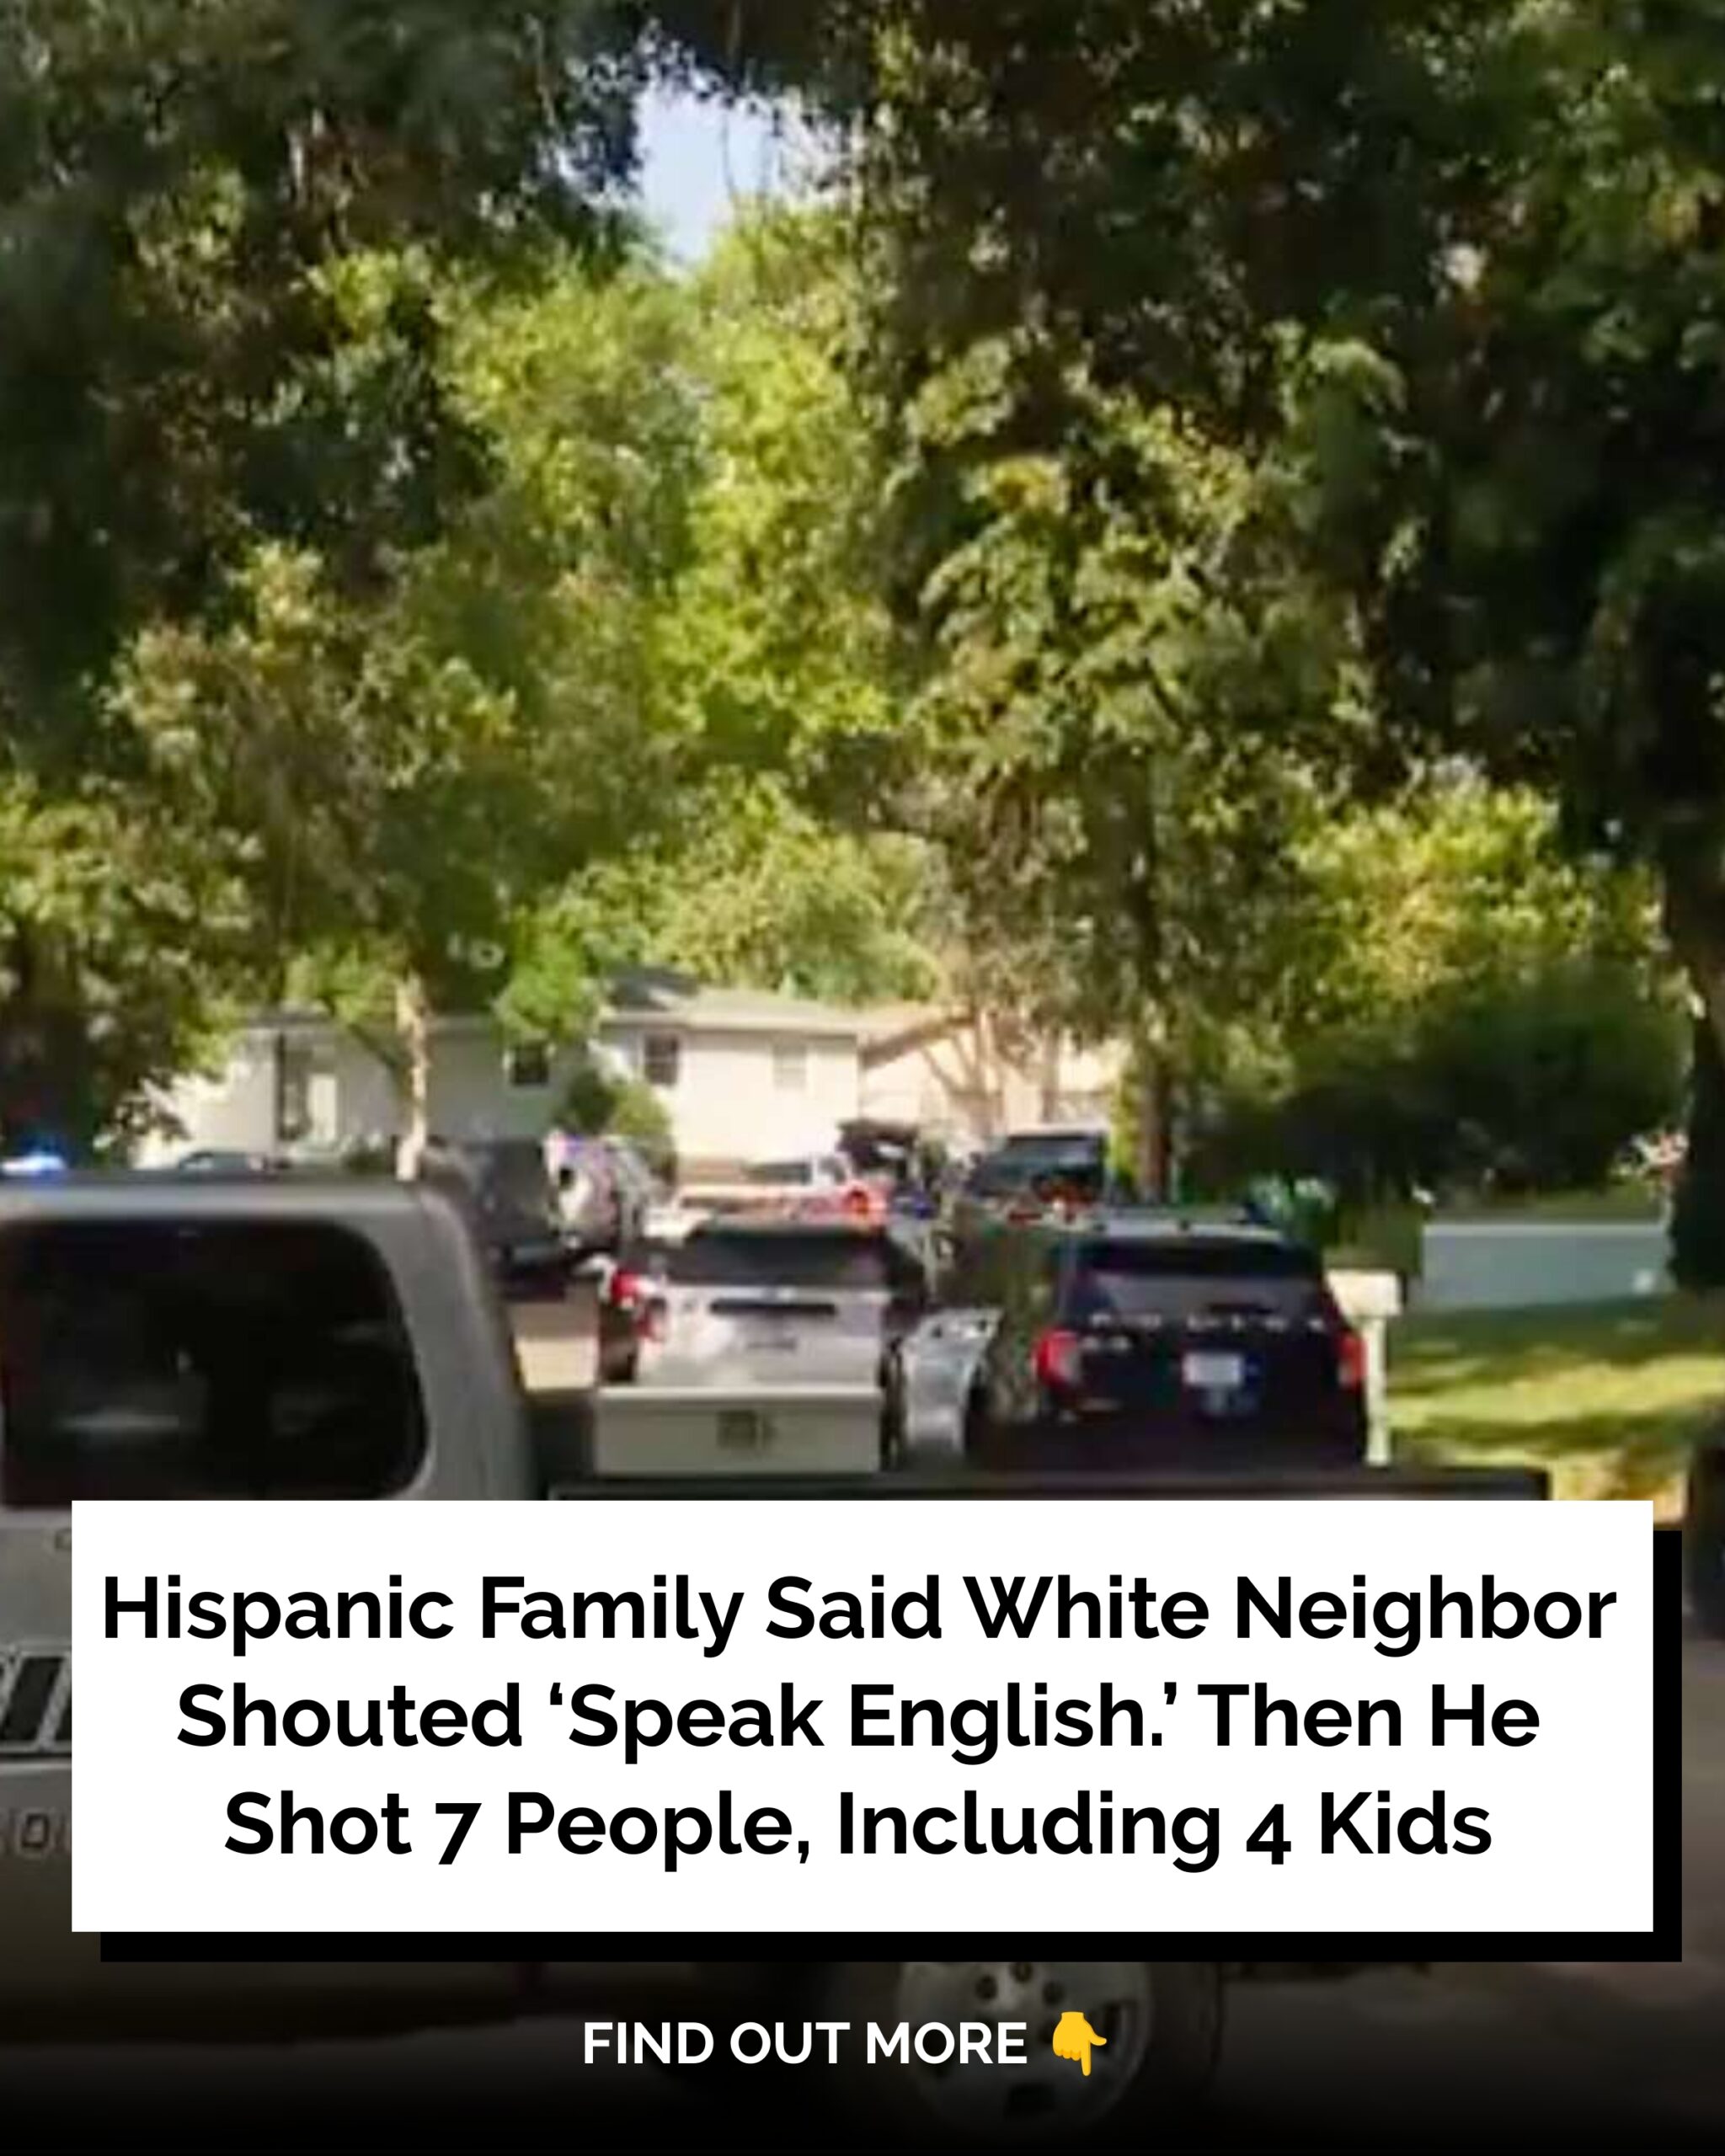 Hispanic Family Said White Neighbor Shouted ‘Speak English’. Then He Shot 7 People, Including 4 Kids